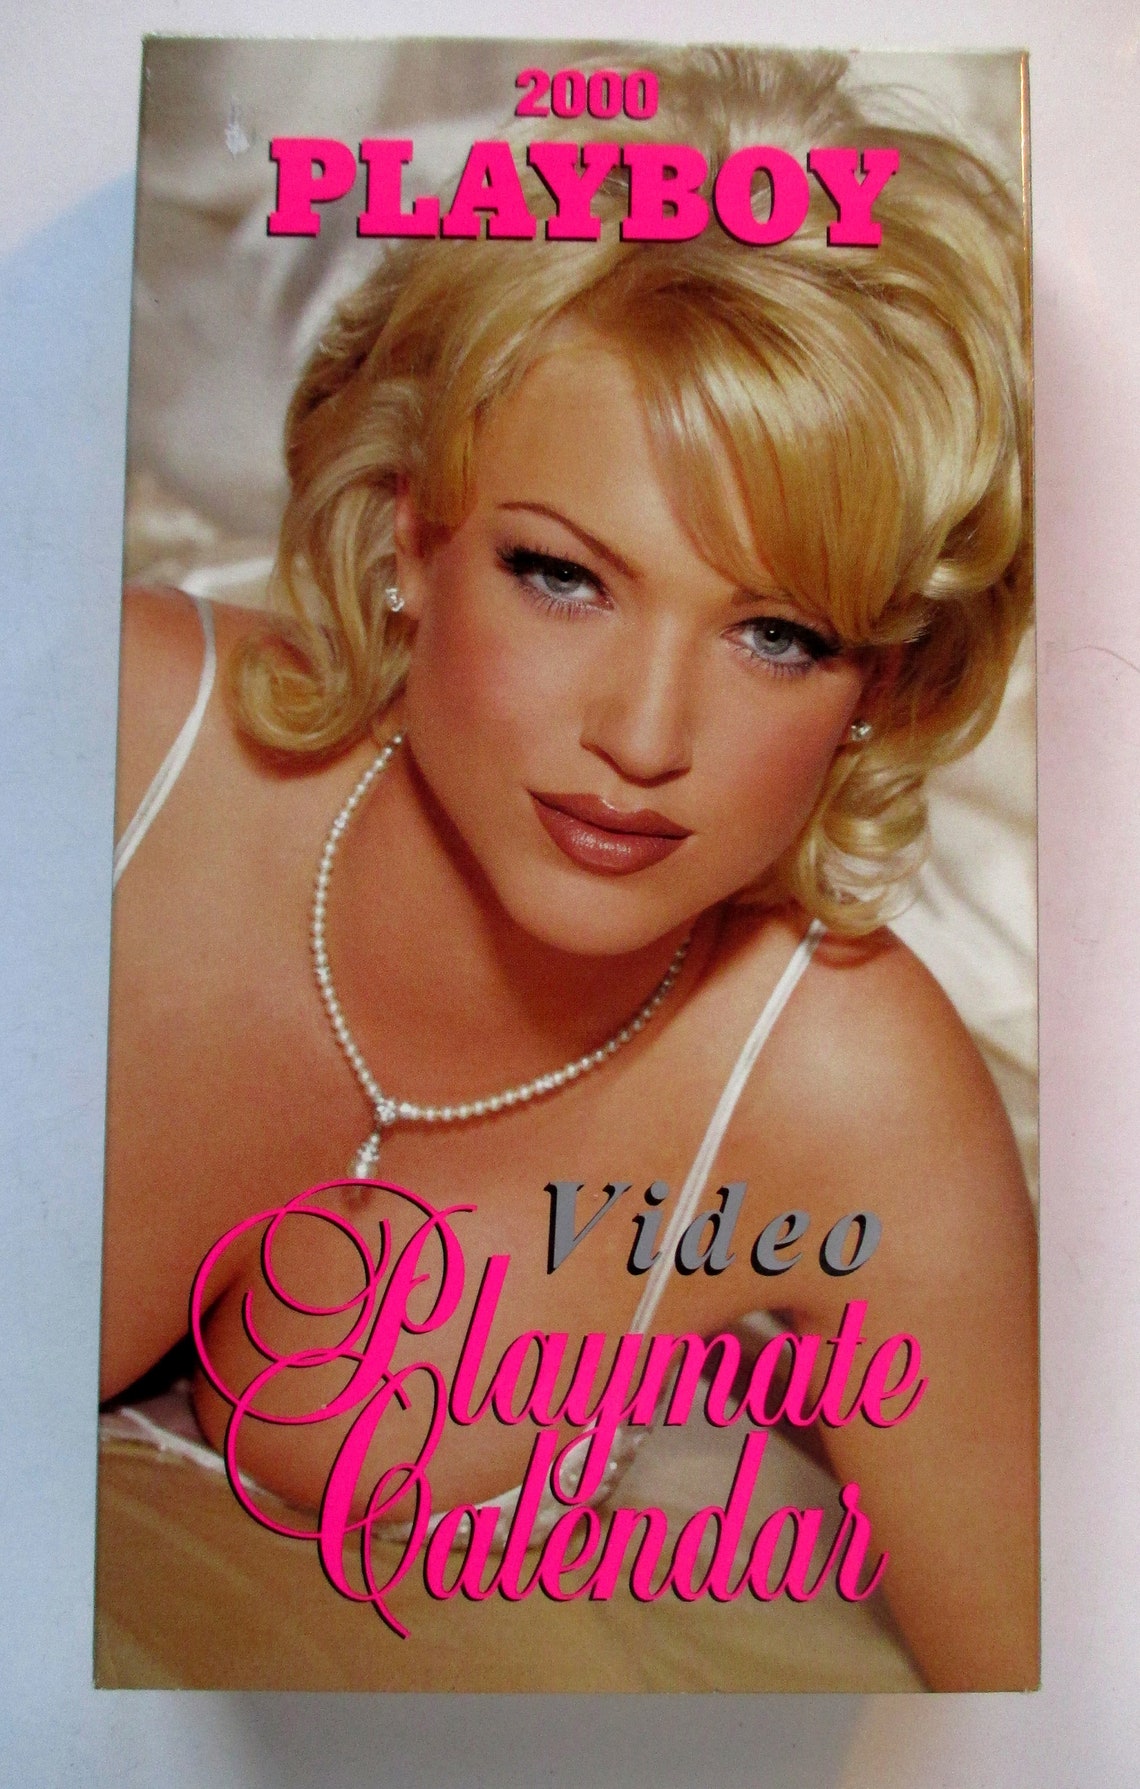 Playboy 2000 Video Playmate Calendar VHS Tape Etsy